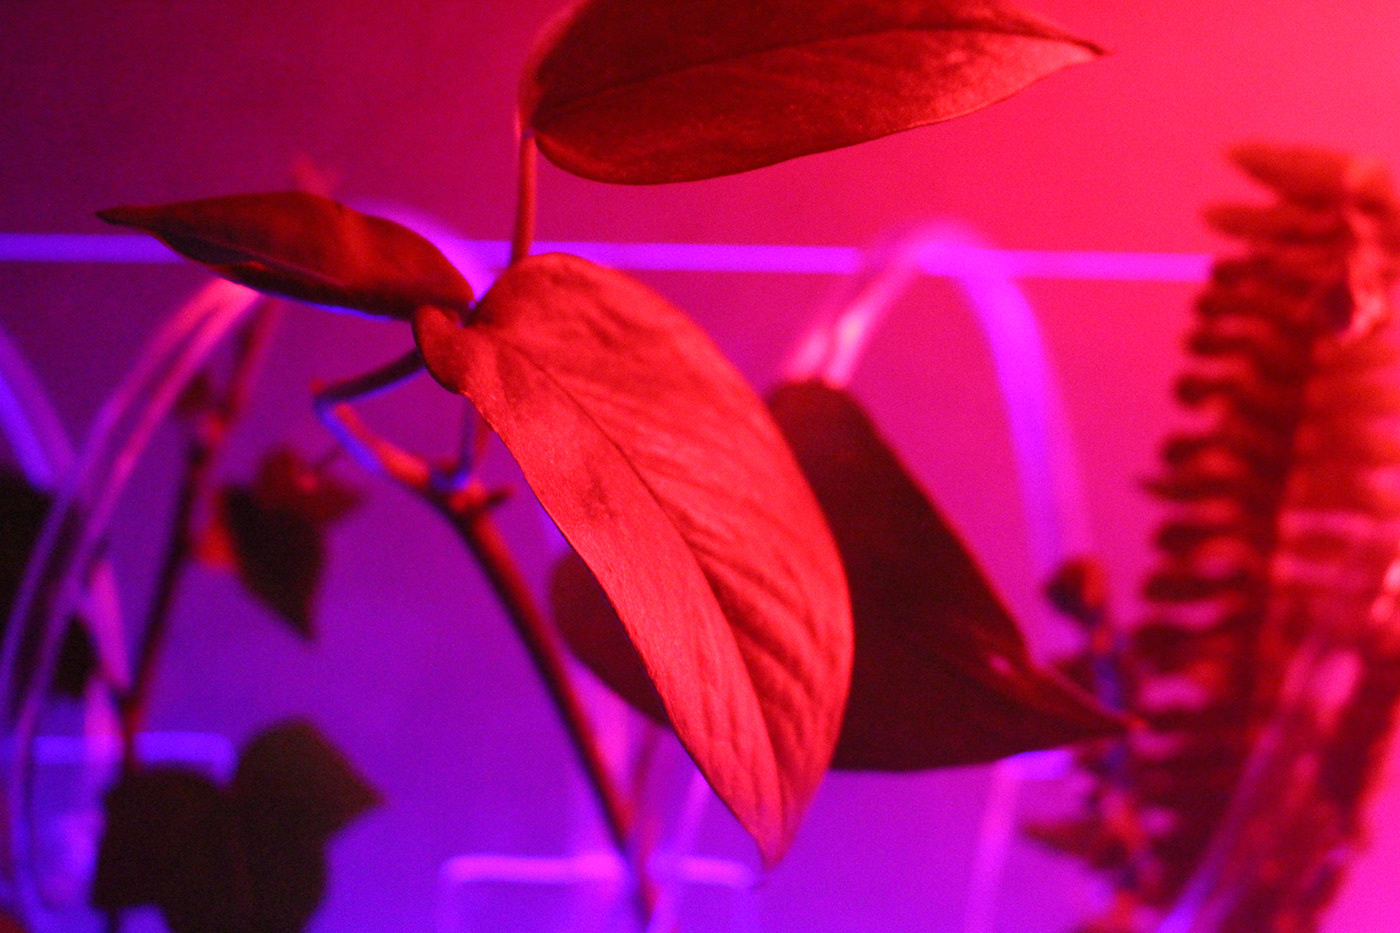 installation interactive biofeedback vaporwave neon light plants Nature Digital Art 